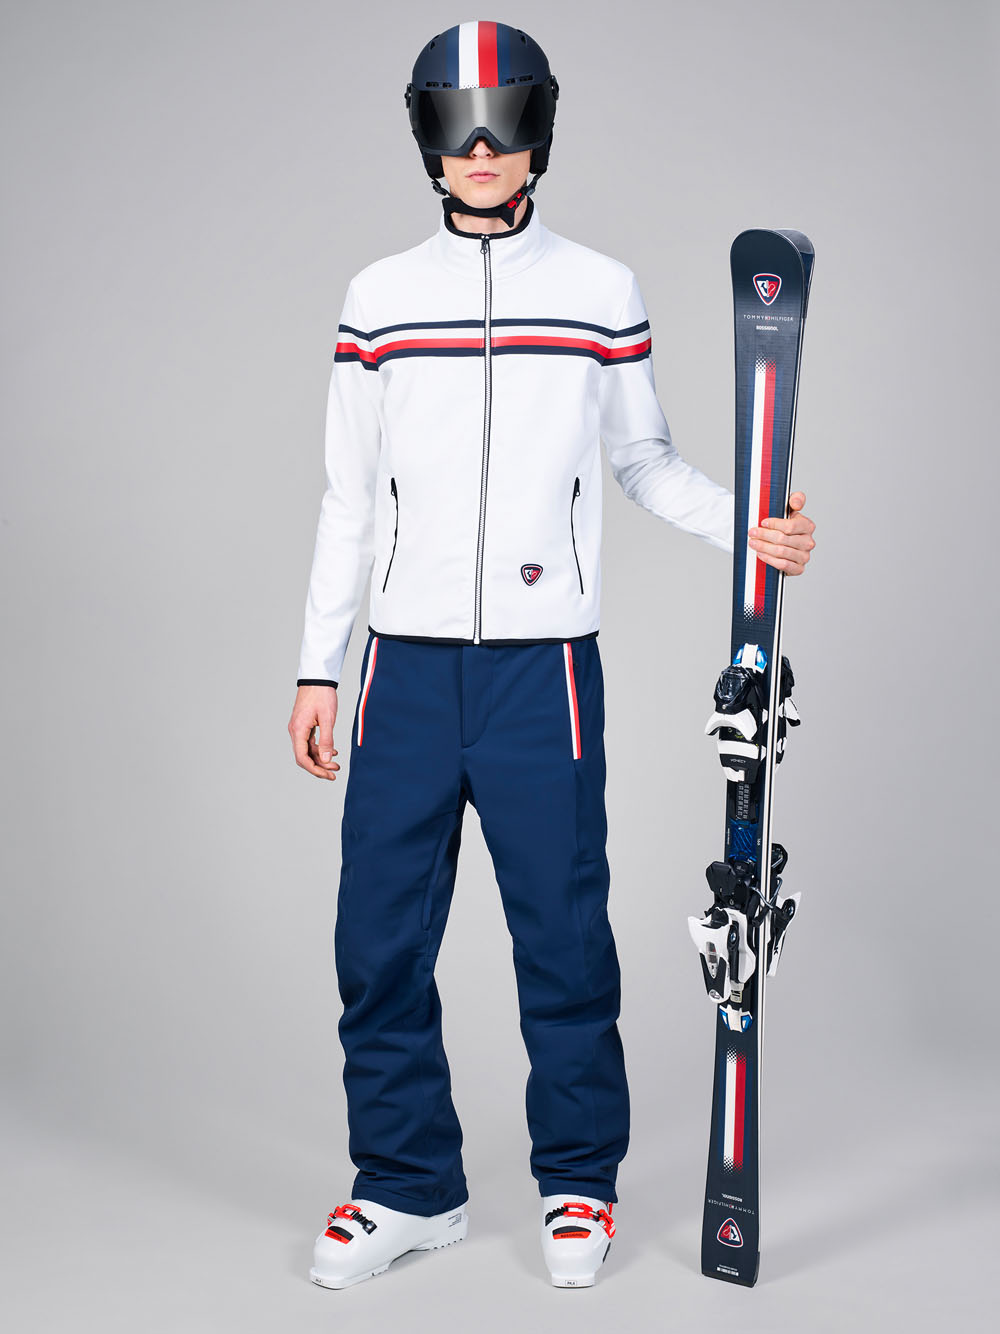 TOMMY HILFIGER于佛罗伦萨男装周期间发布与ROSSIGNOL合作的男式滑雪套装